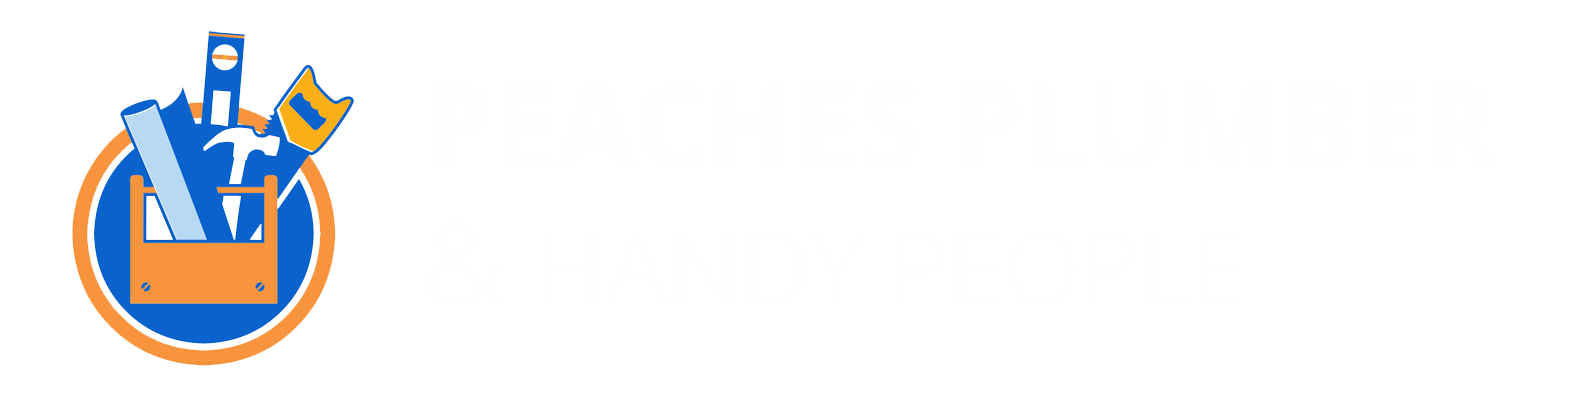 Peaches Plumber UPDATED Logo